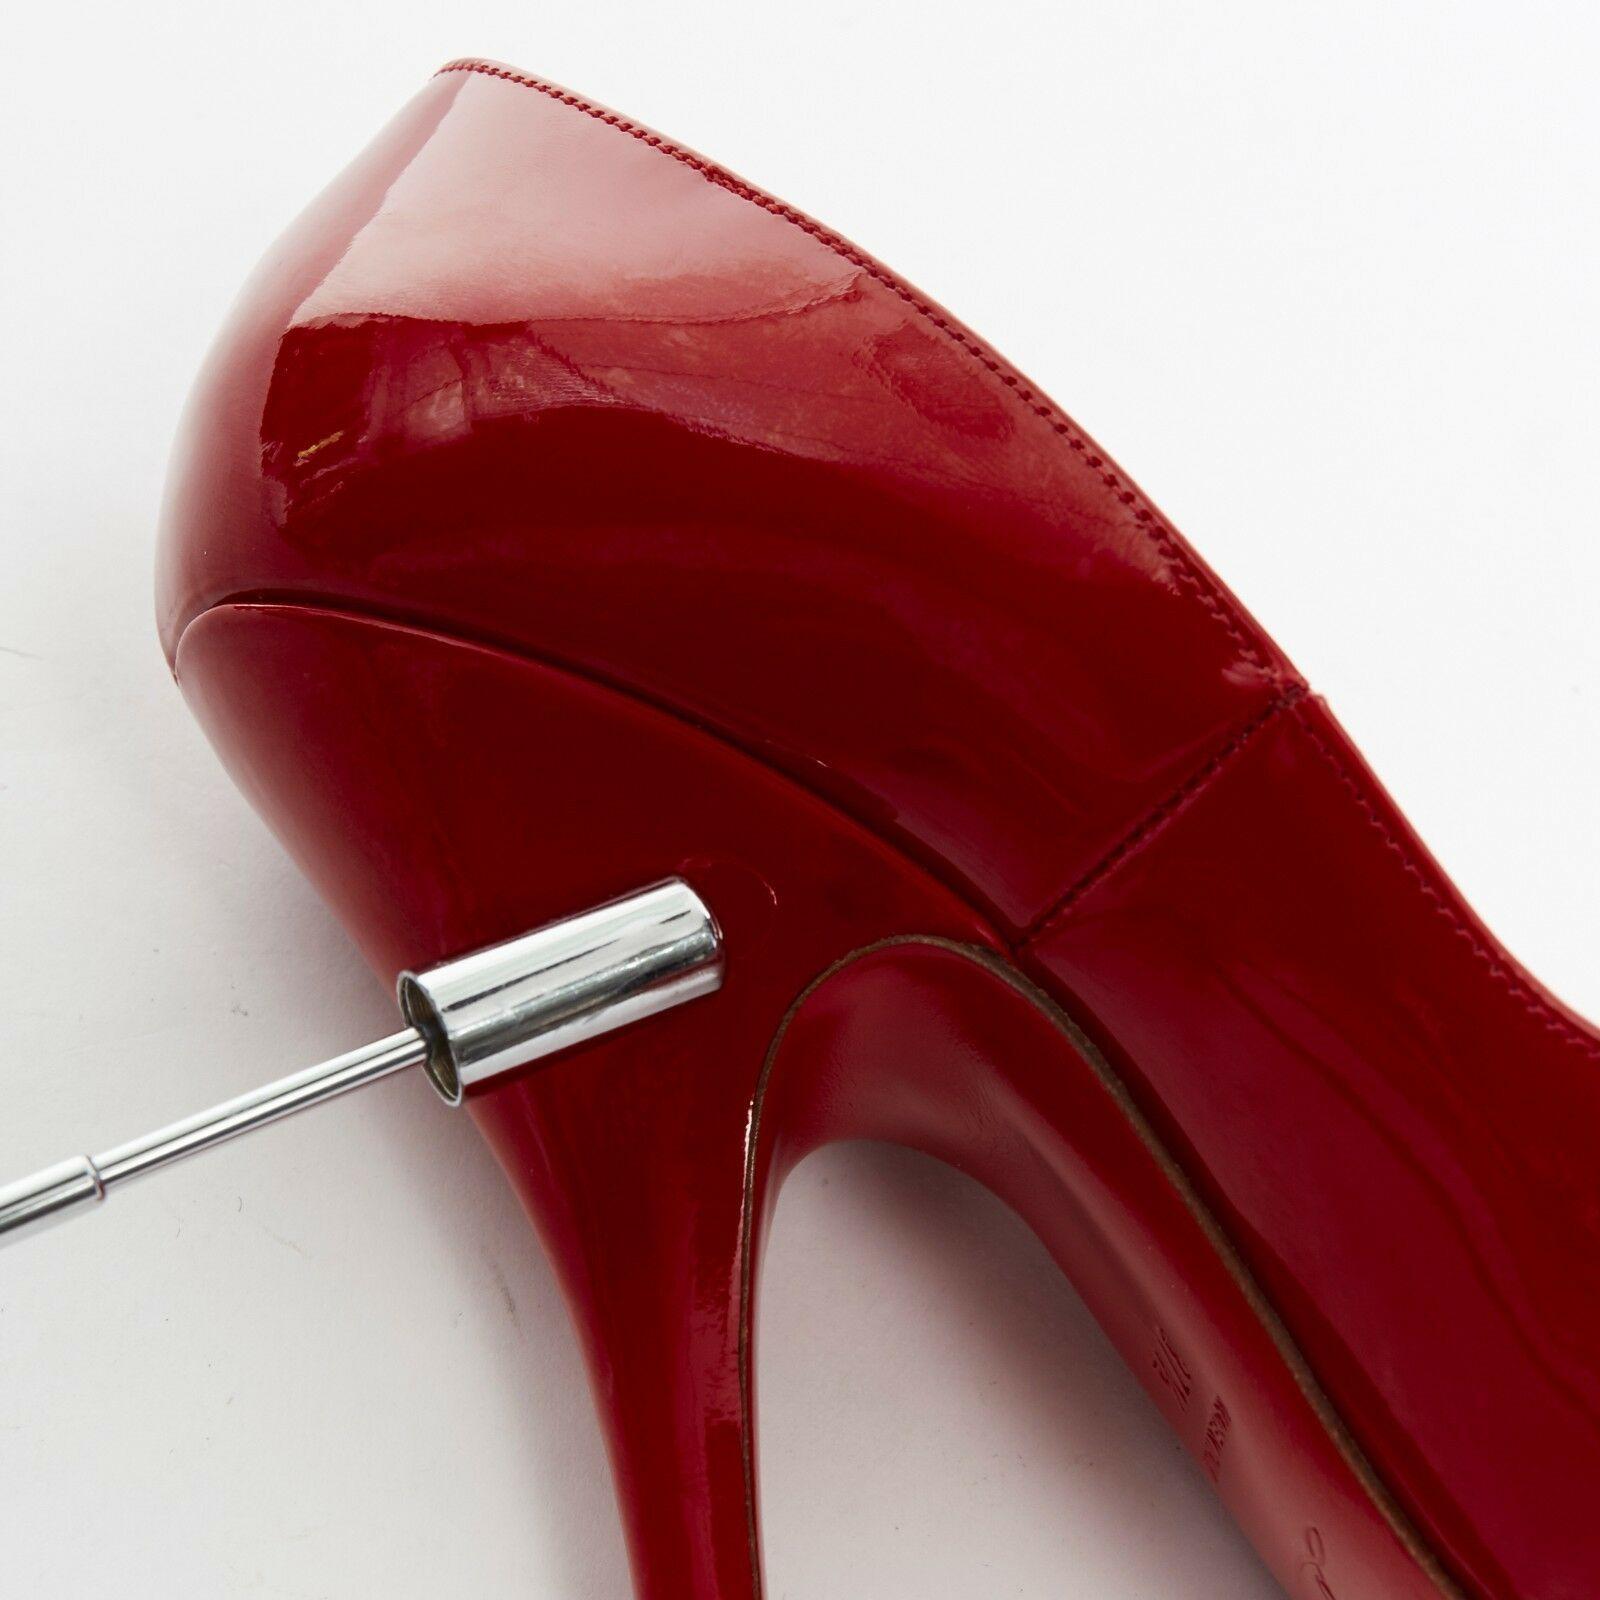 CHRISTIAN LOUBOUTIN Maryl 120 red patent curved heel peeptoe heels EU37.5 US7.5 6